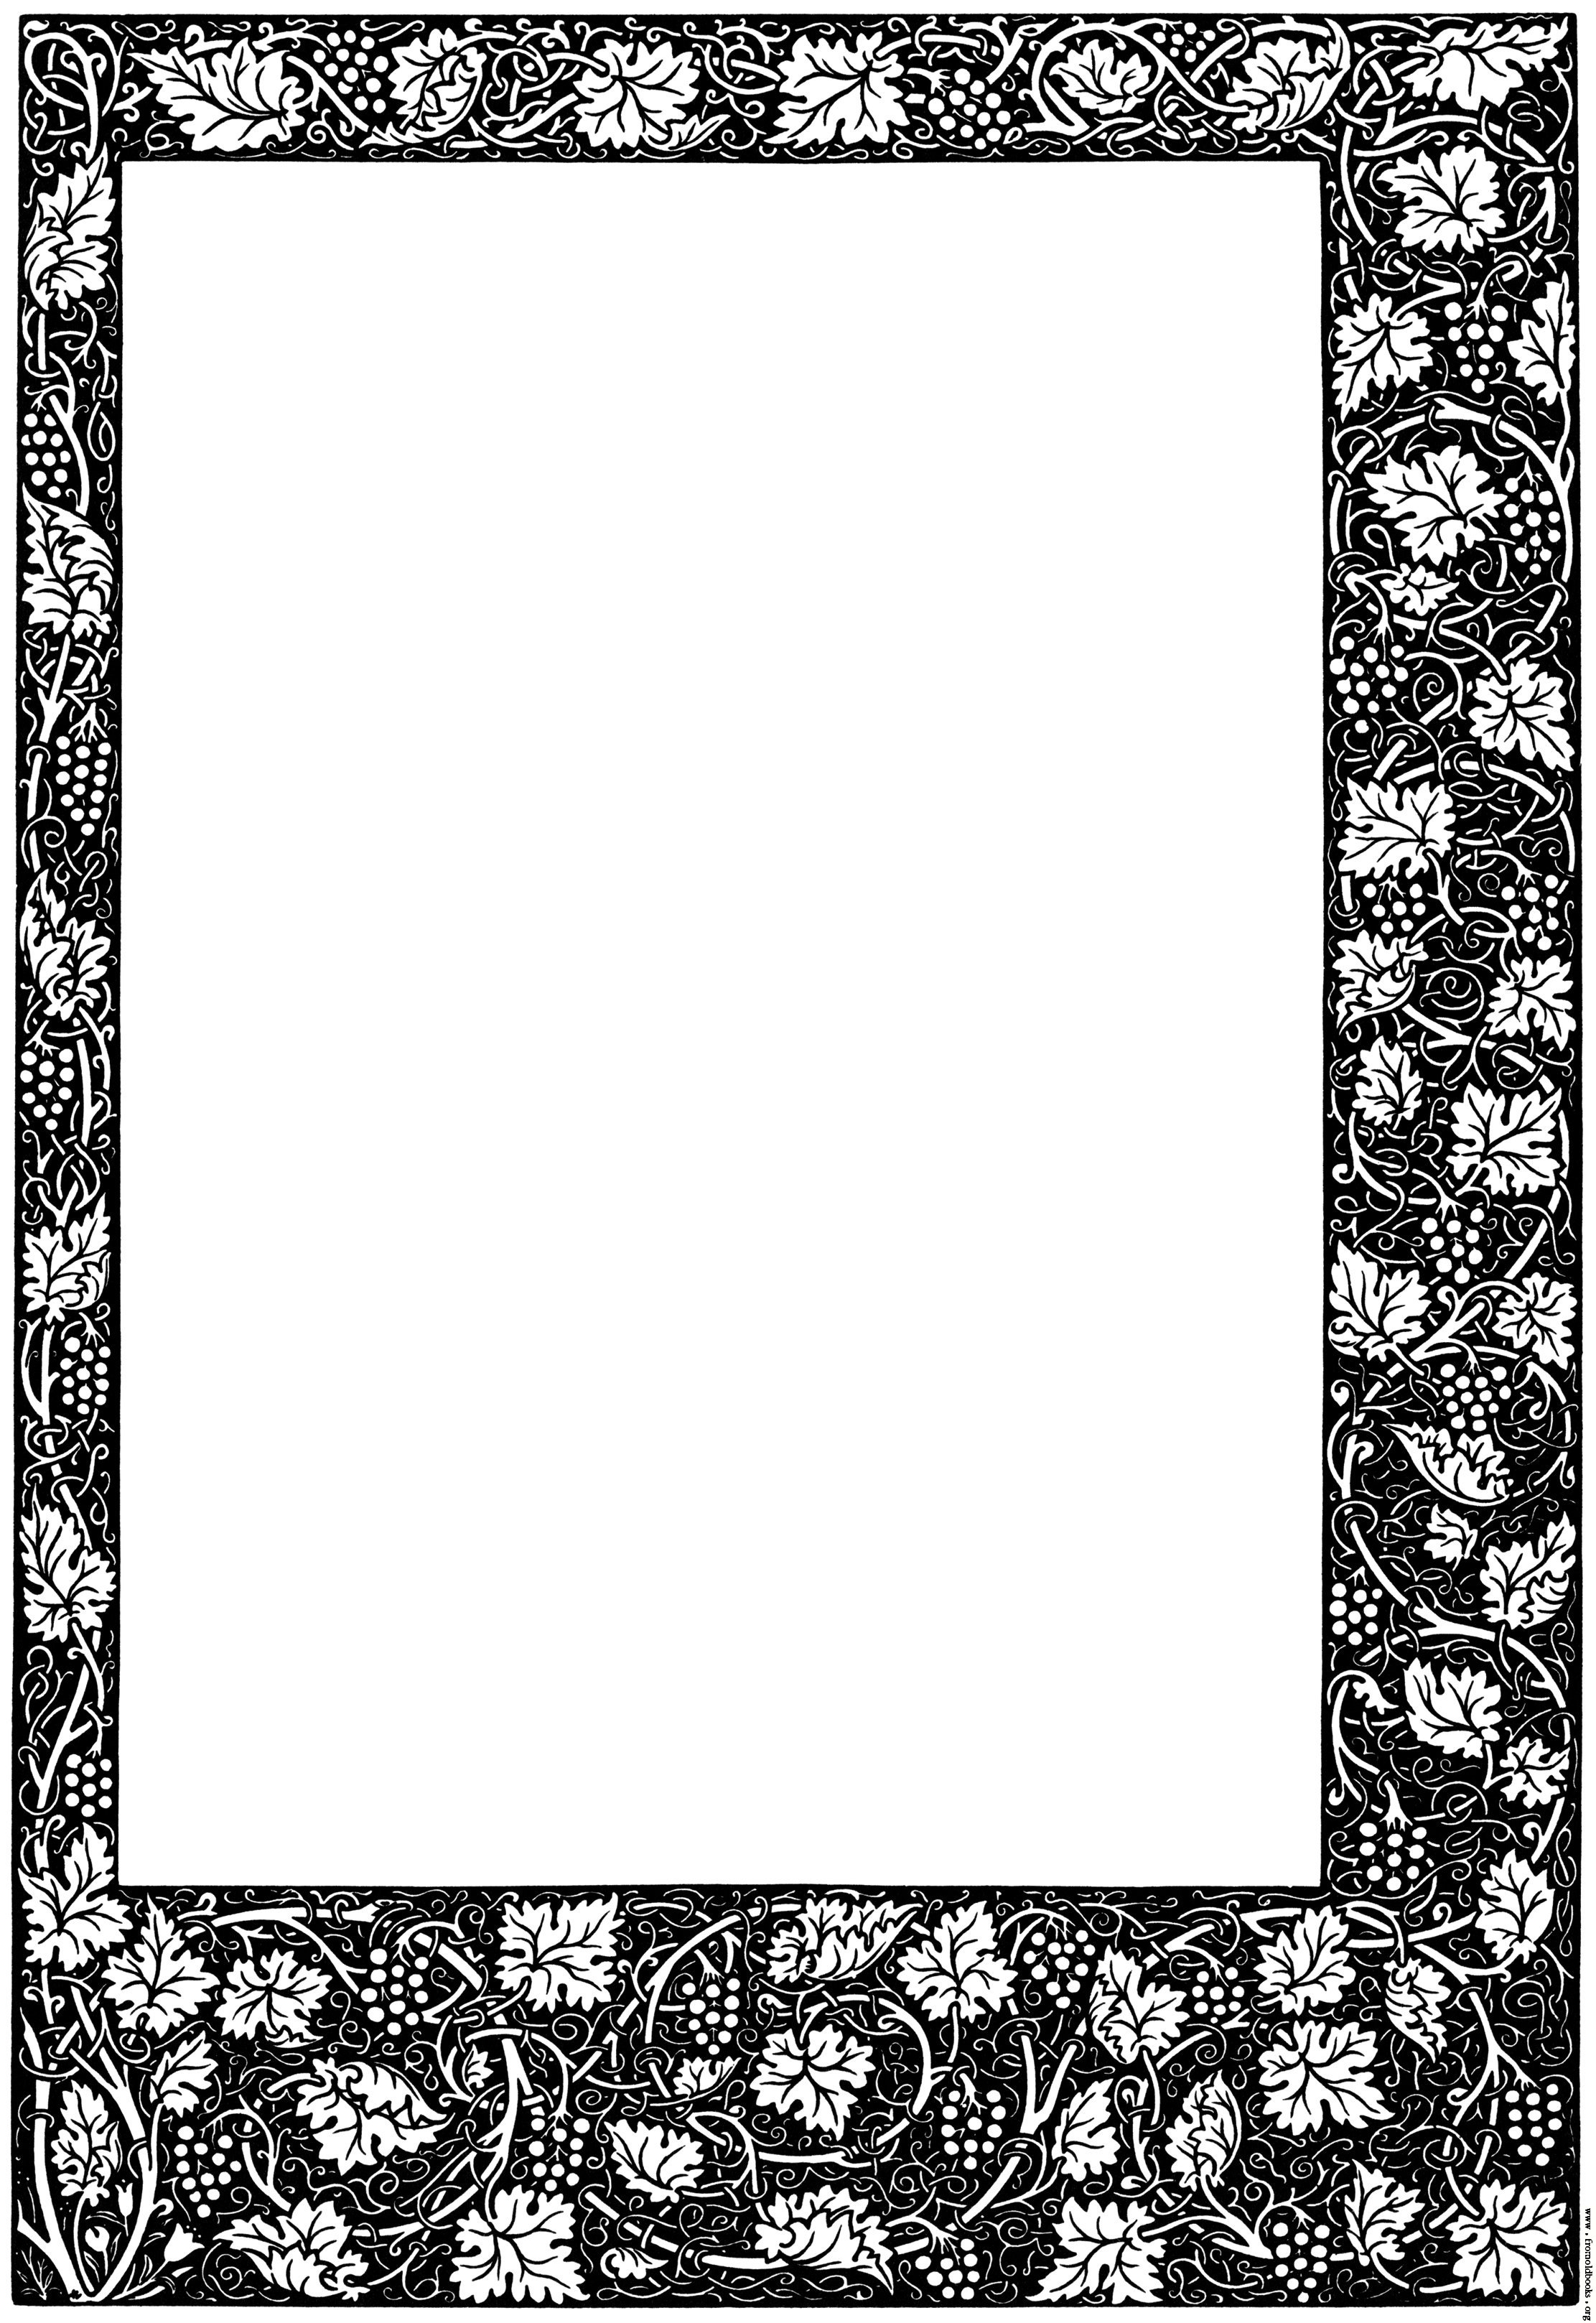 page 501: the vine-leaf page border [image 344x500 pixels]